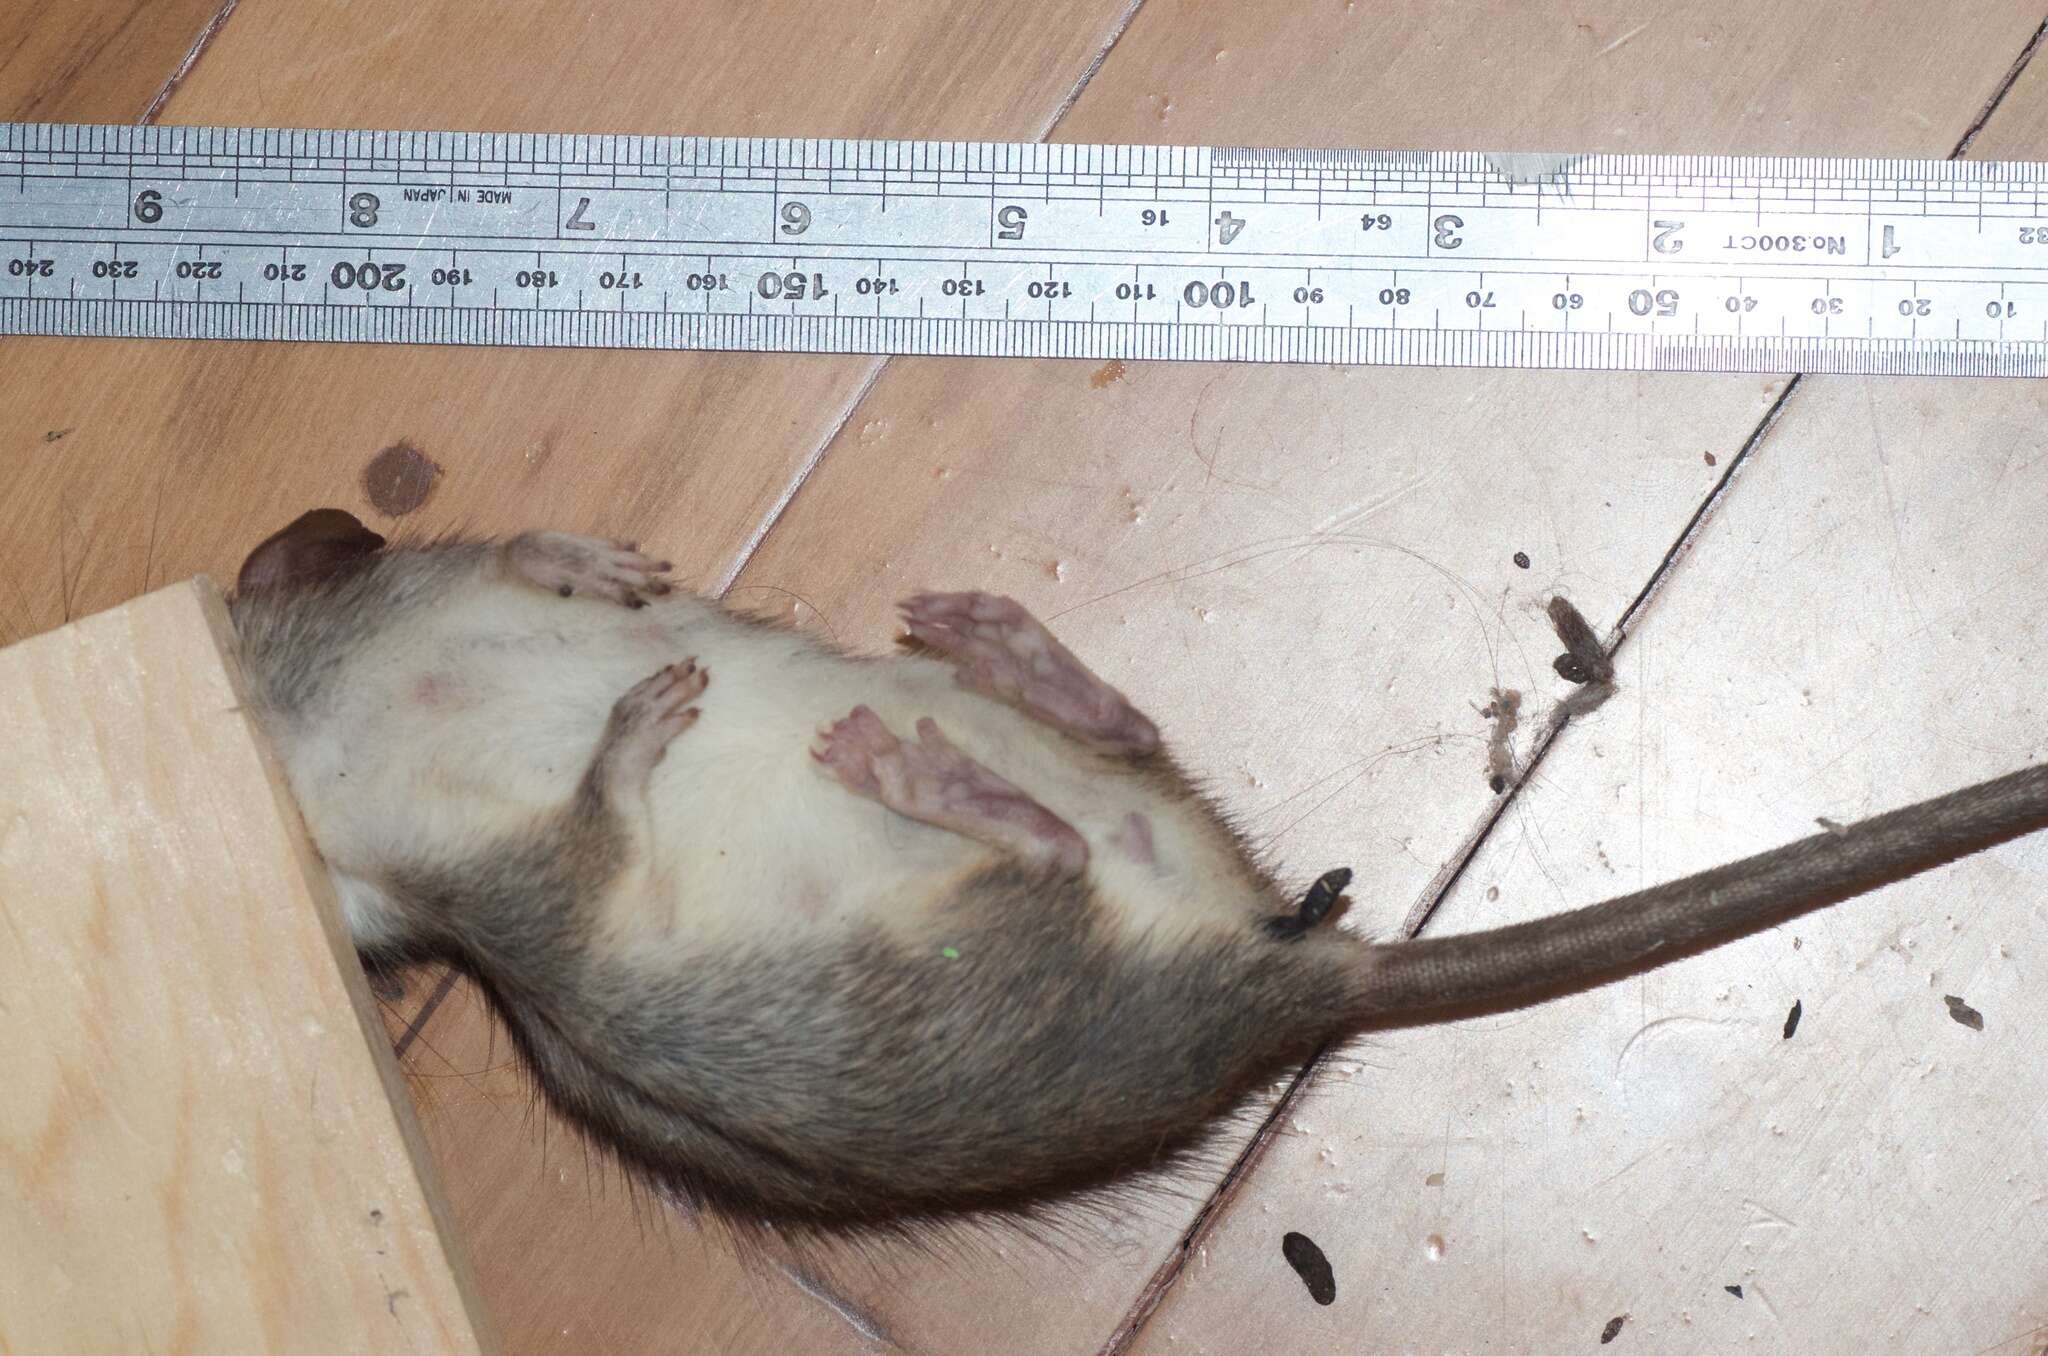 Image of Black Rat